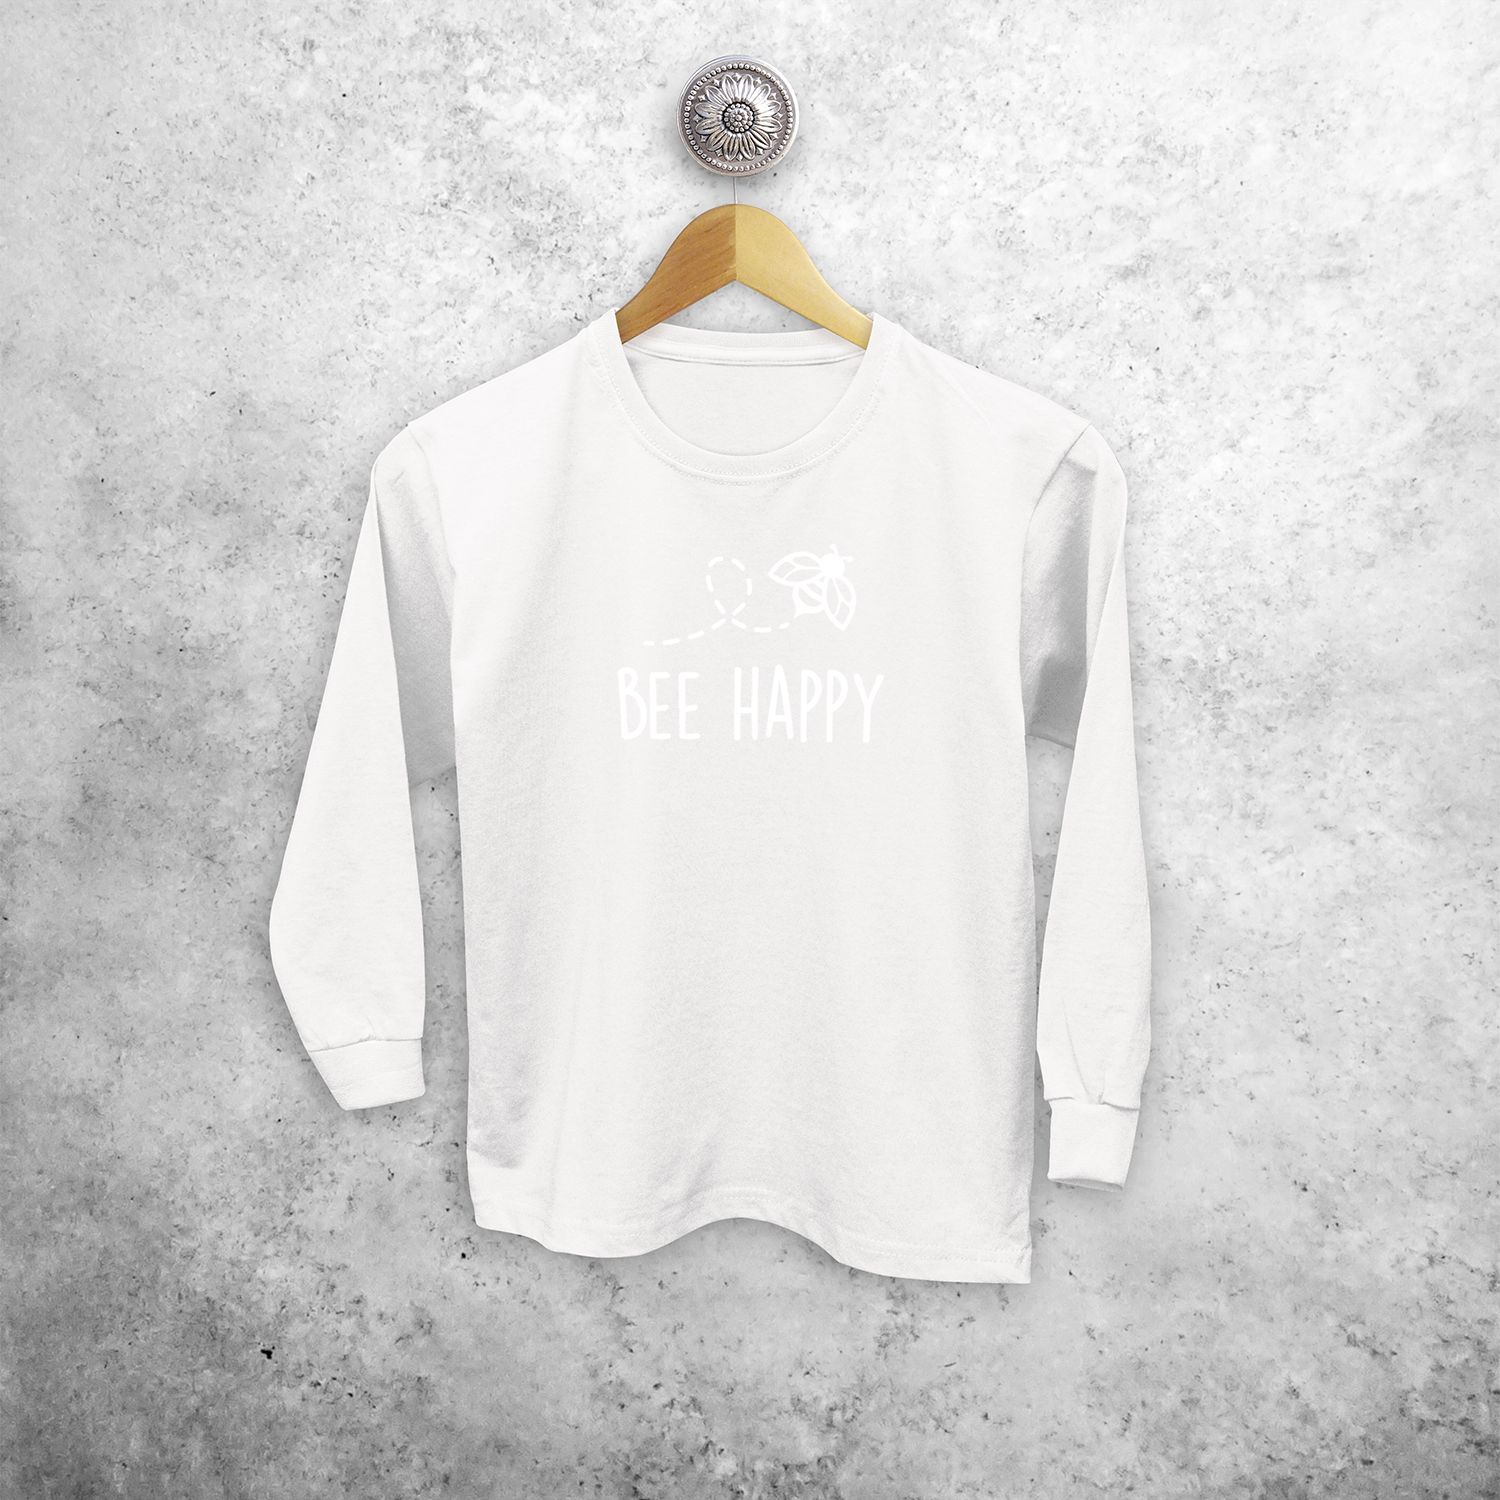 'Bee happy' magic kids longsleeve shirt